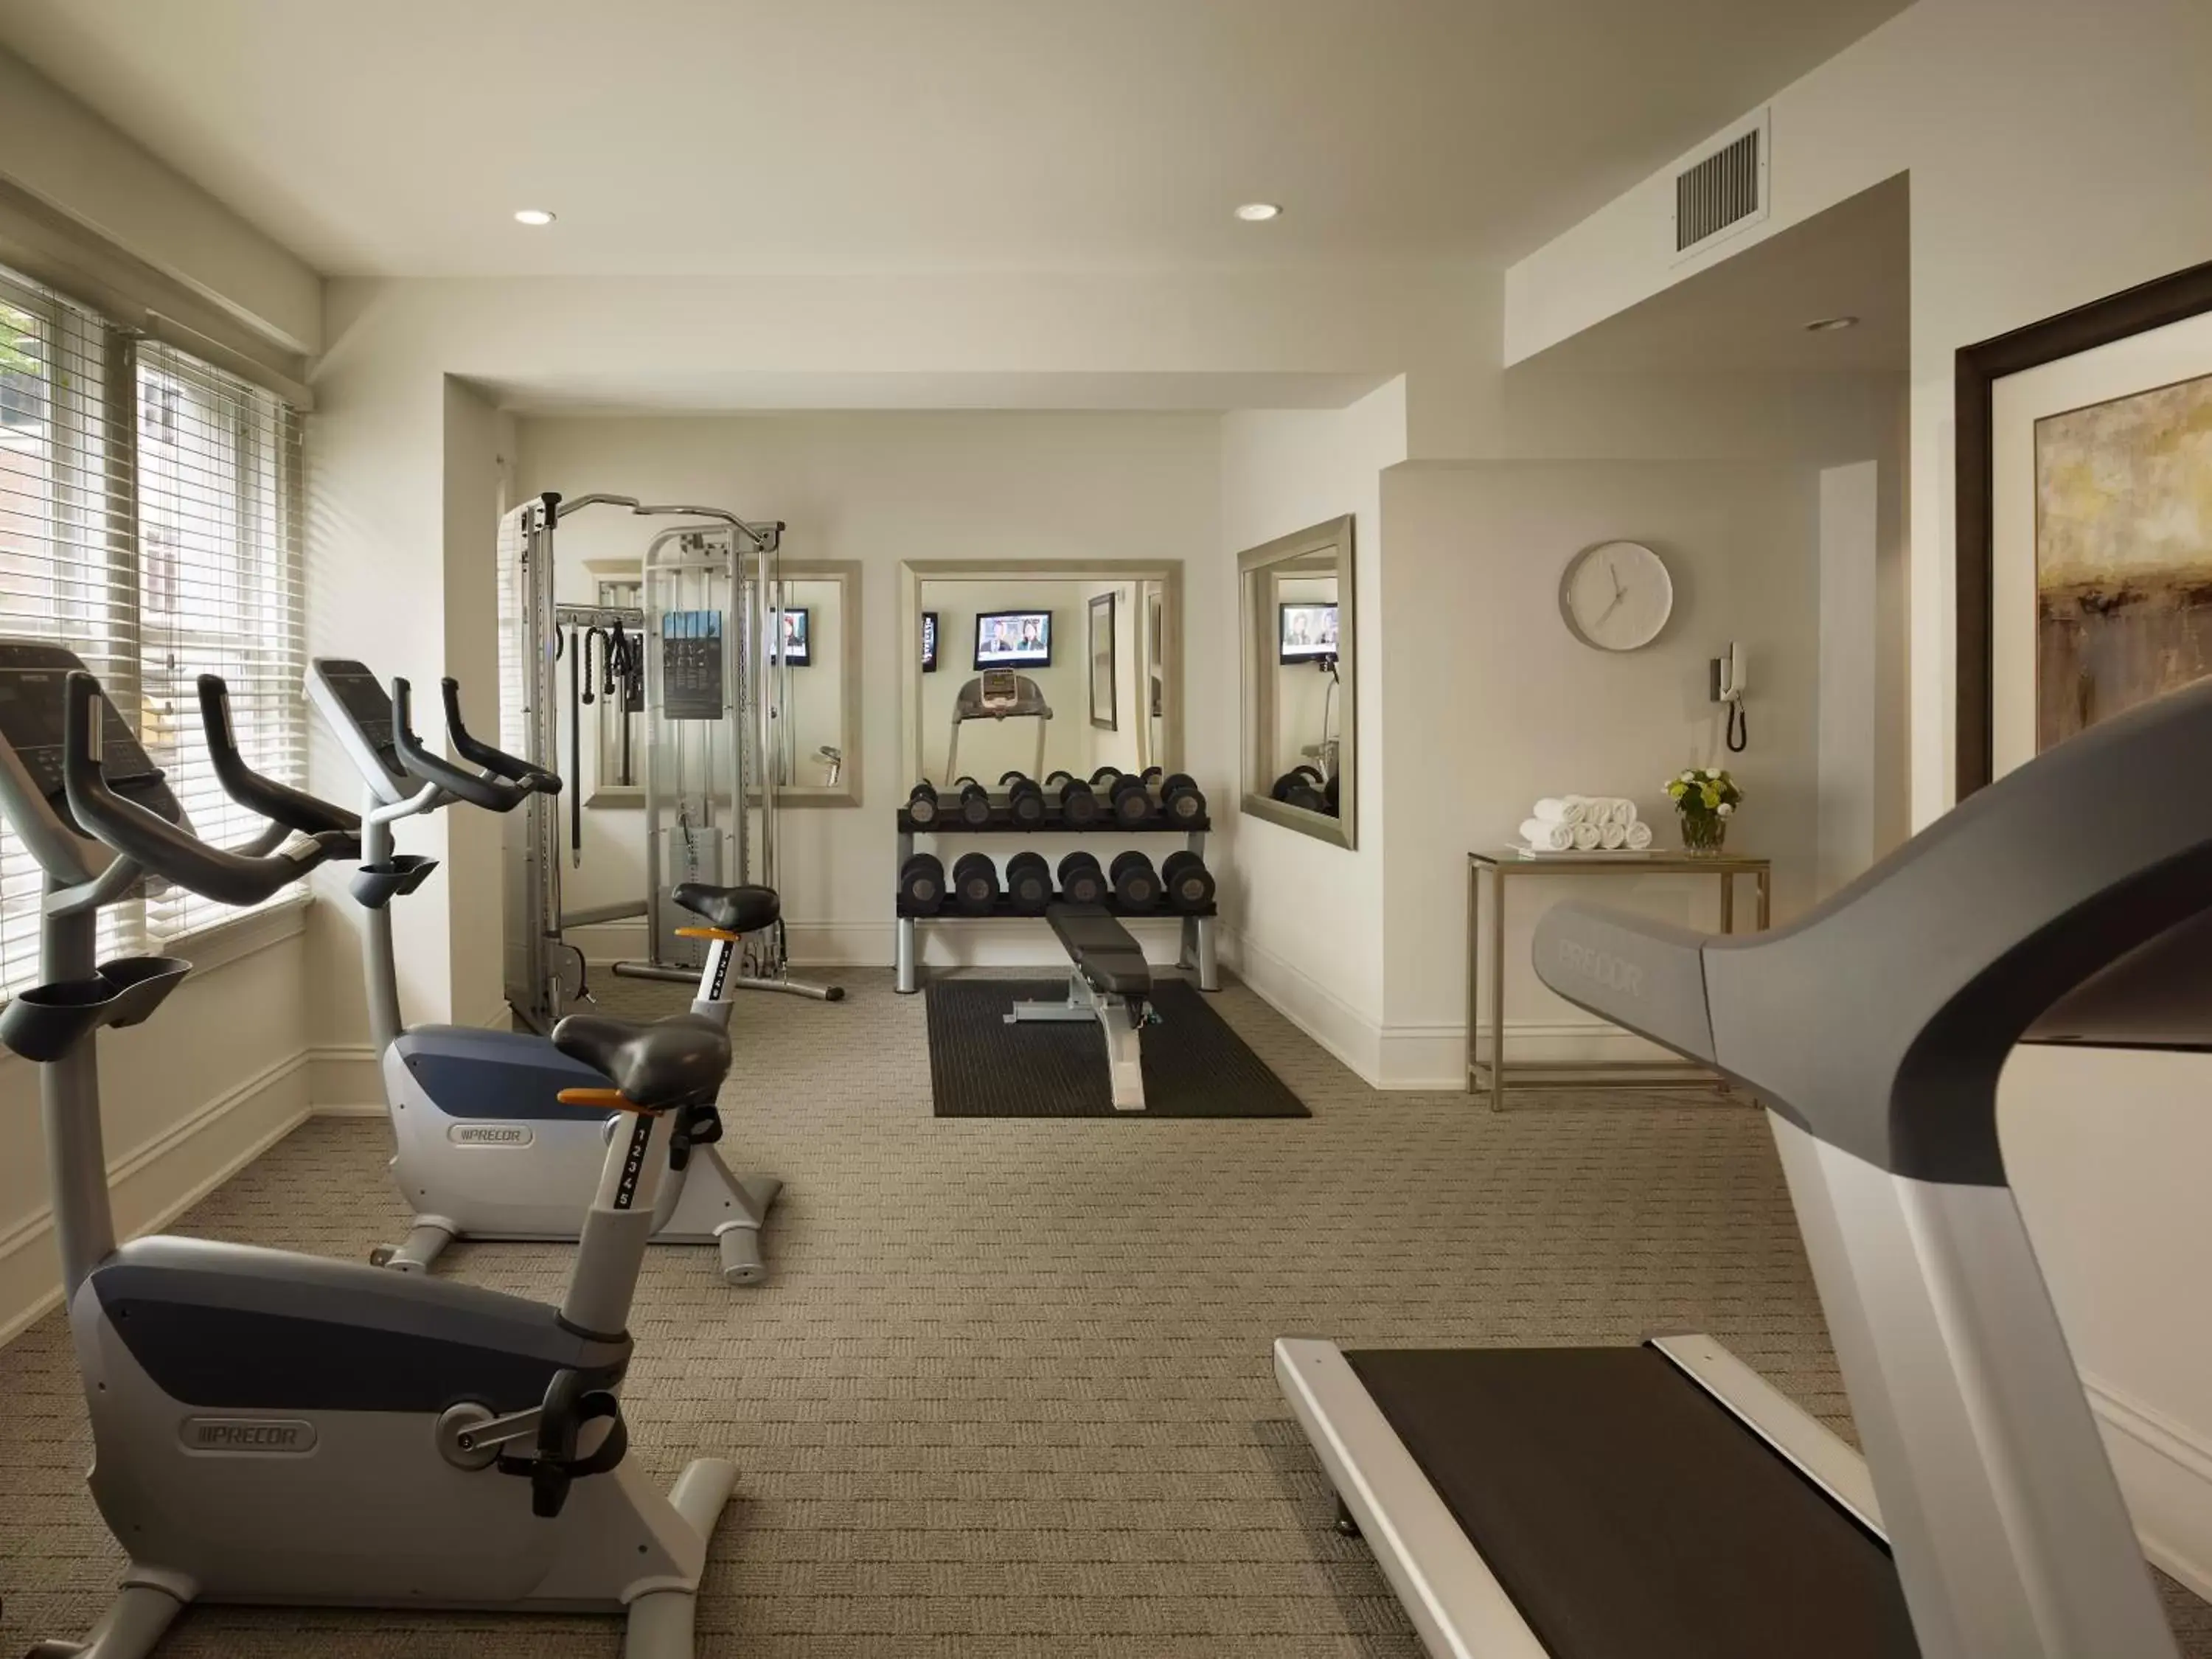 Fitness centre/facilities, Fitness Center/Facilities in AKA Rittenhouse Square